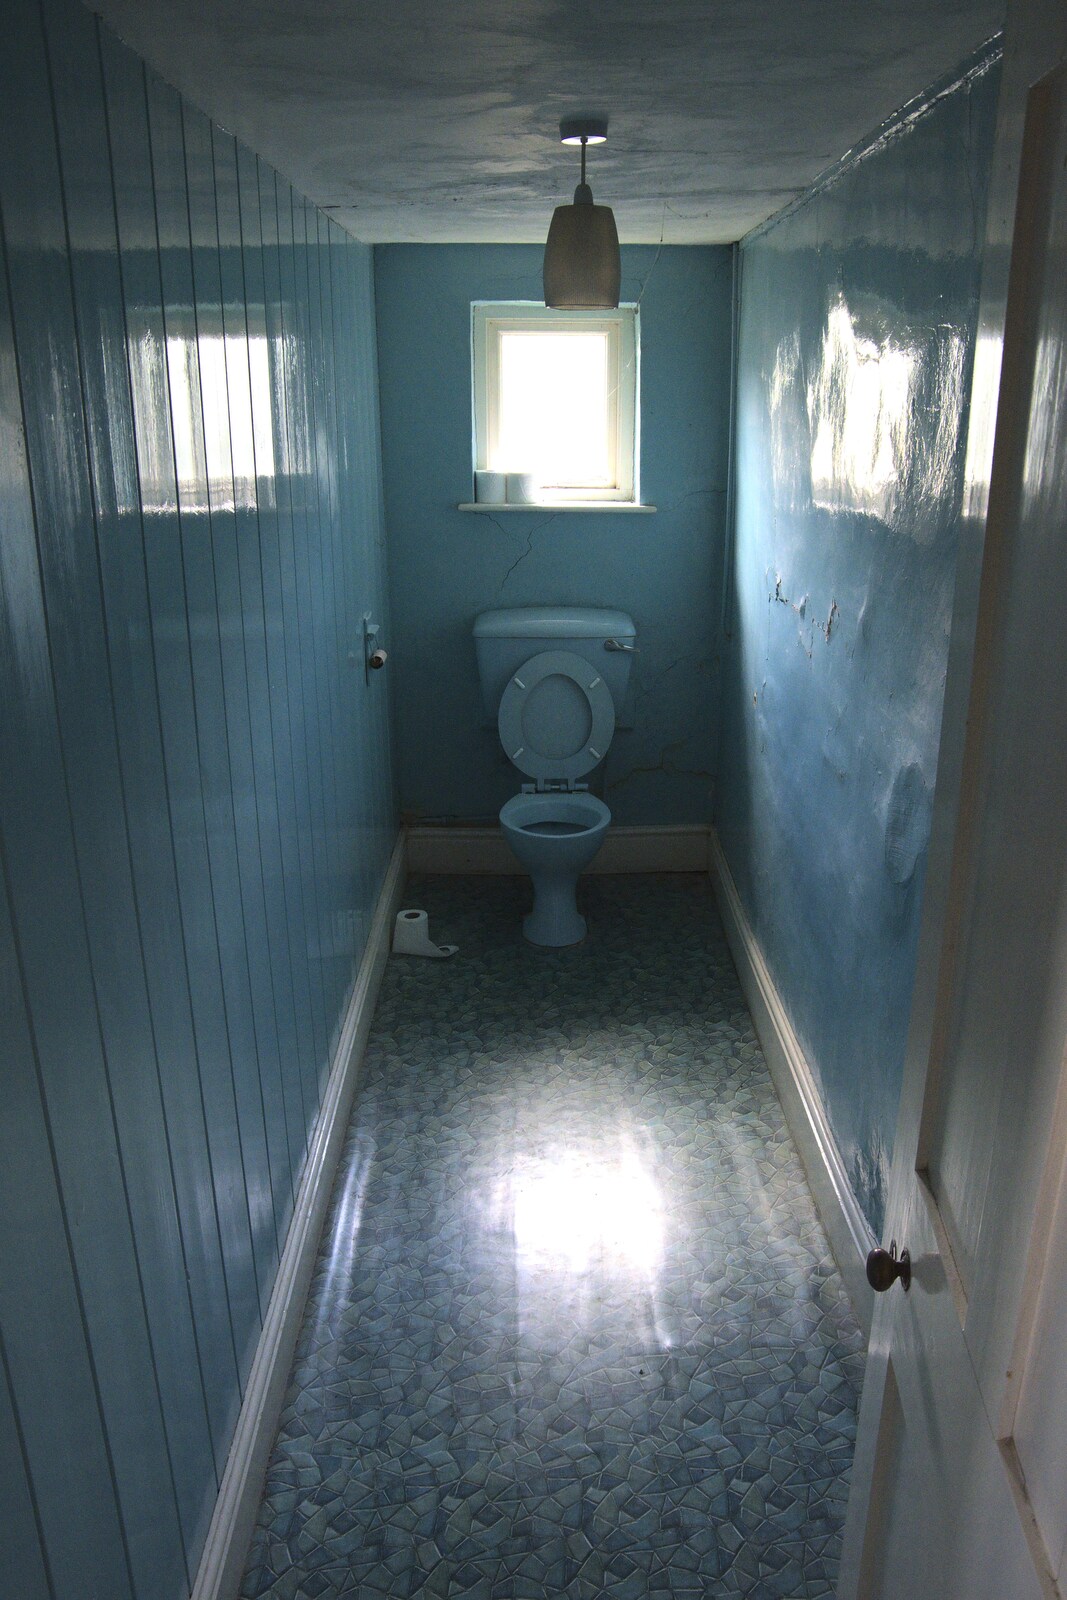 A disturbingly-long toilet from A 1940s Timewarp, Site 4, Bungay Airfield, Flixton, Suffolk - 9th June 2022